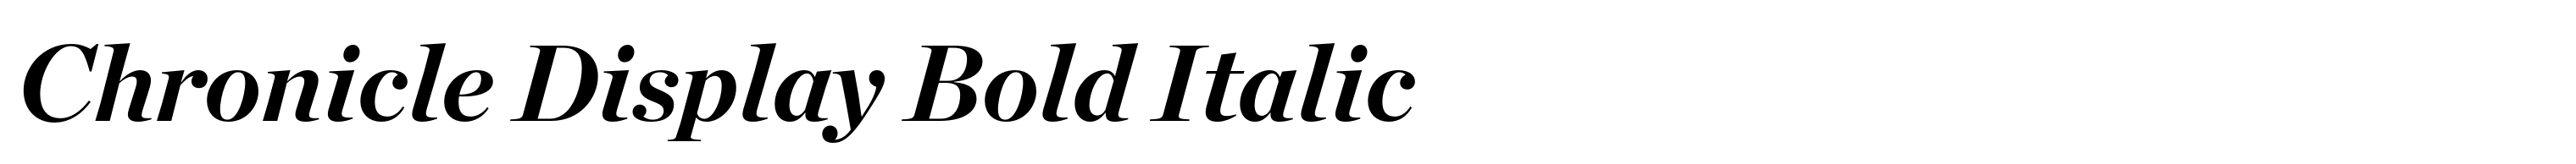 Chronicle Display Bold Italic